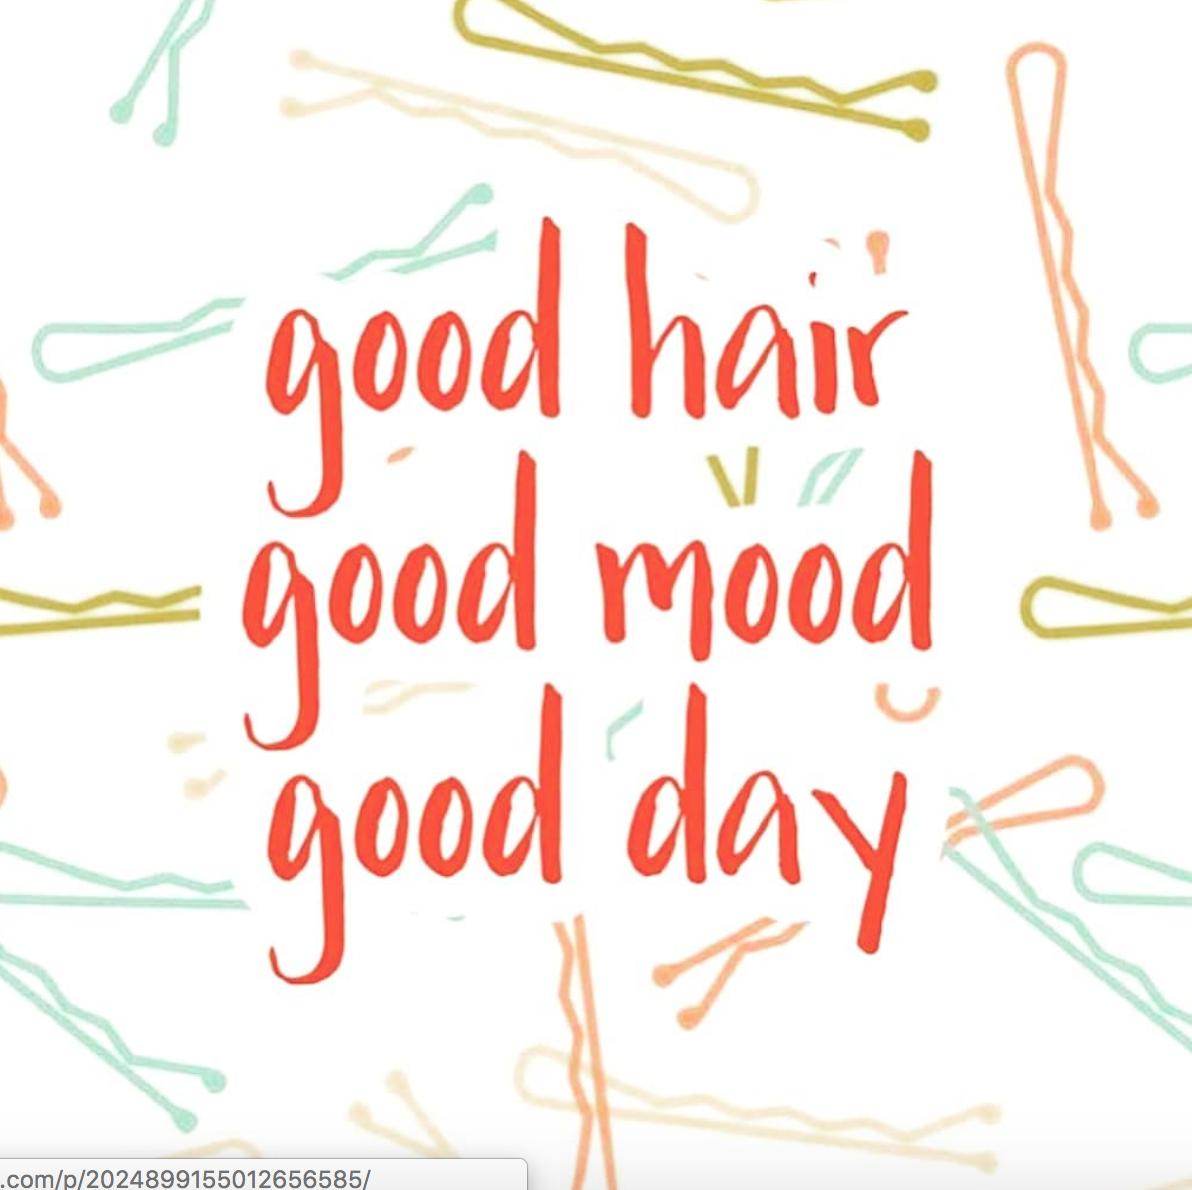 Happy Hair day - YouTube